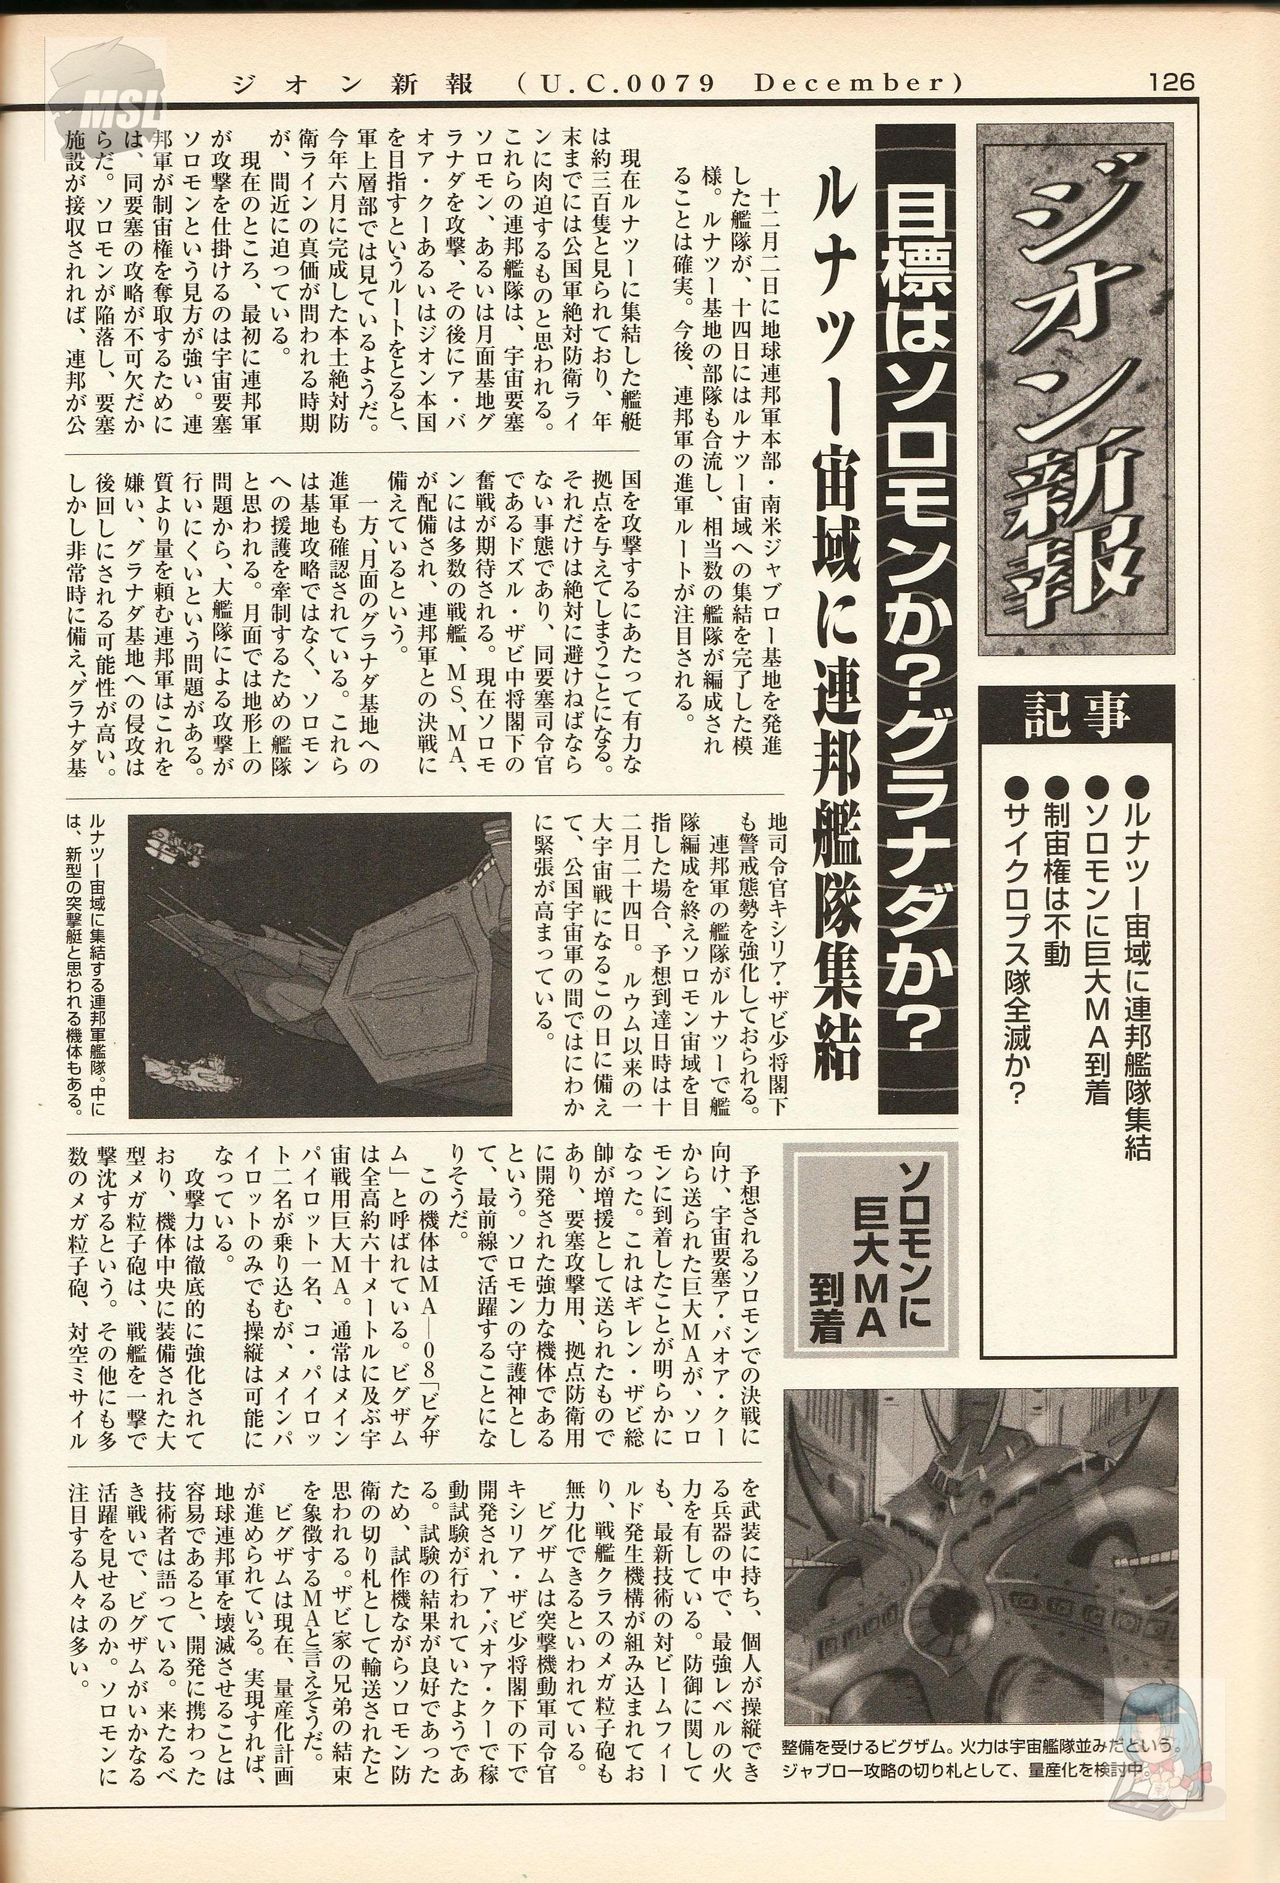 Mobile Suit Gundam - Zeon - Classified Records 129